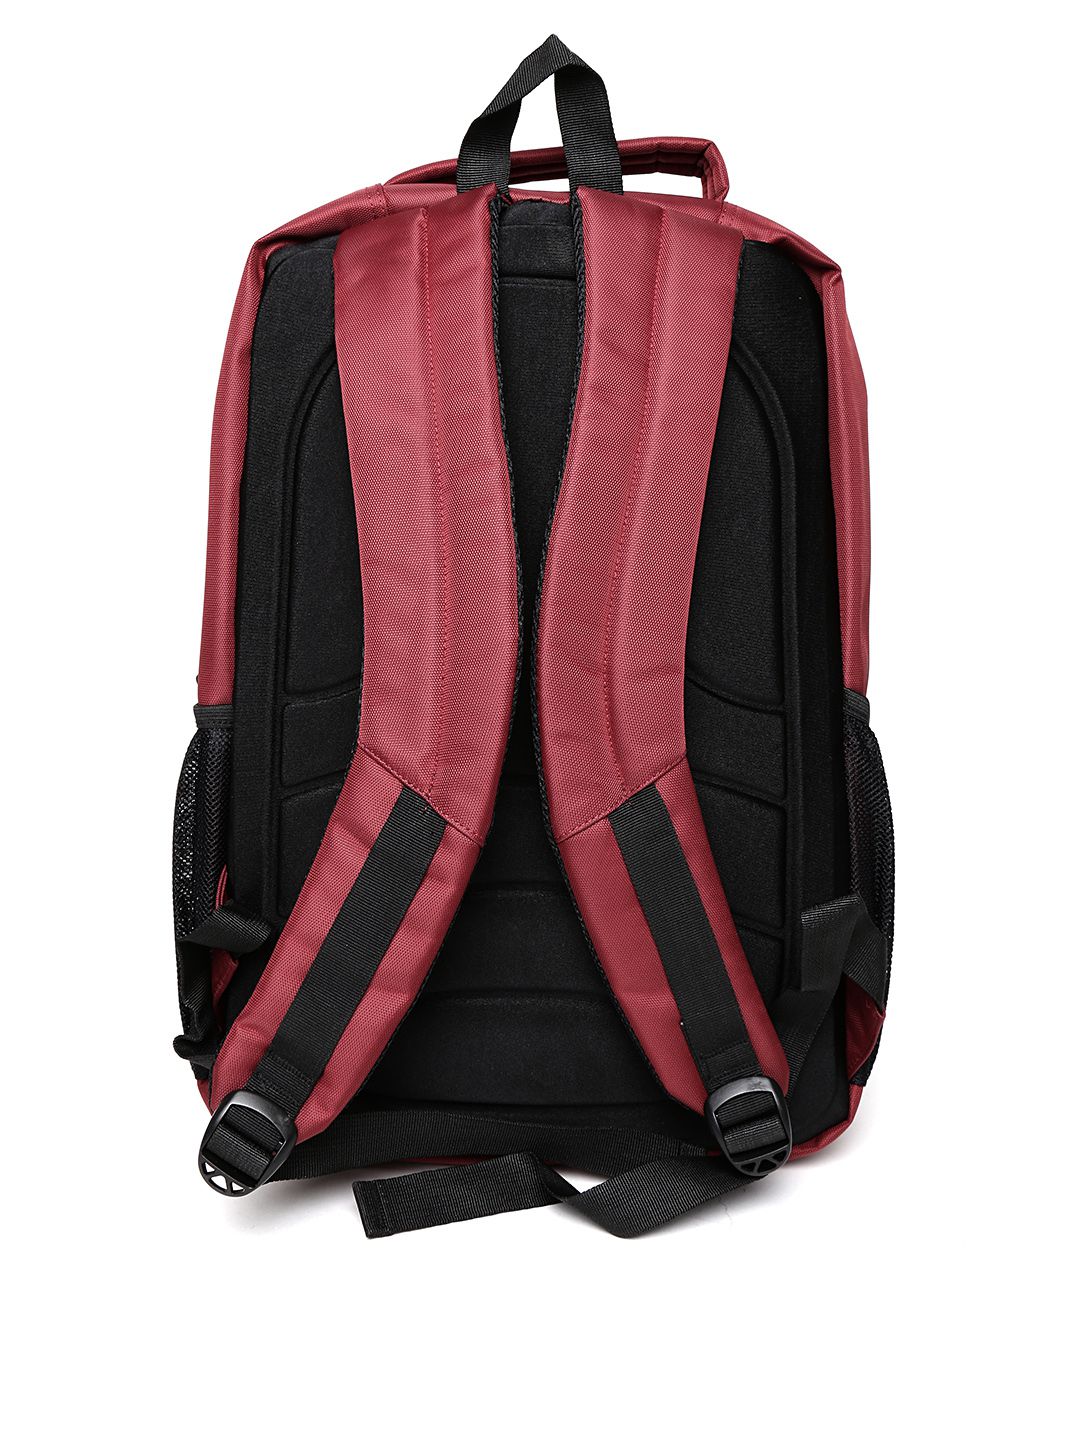 Swiss Military Red Nylon Backpack Buy Swiss Military Red Nylon